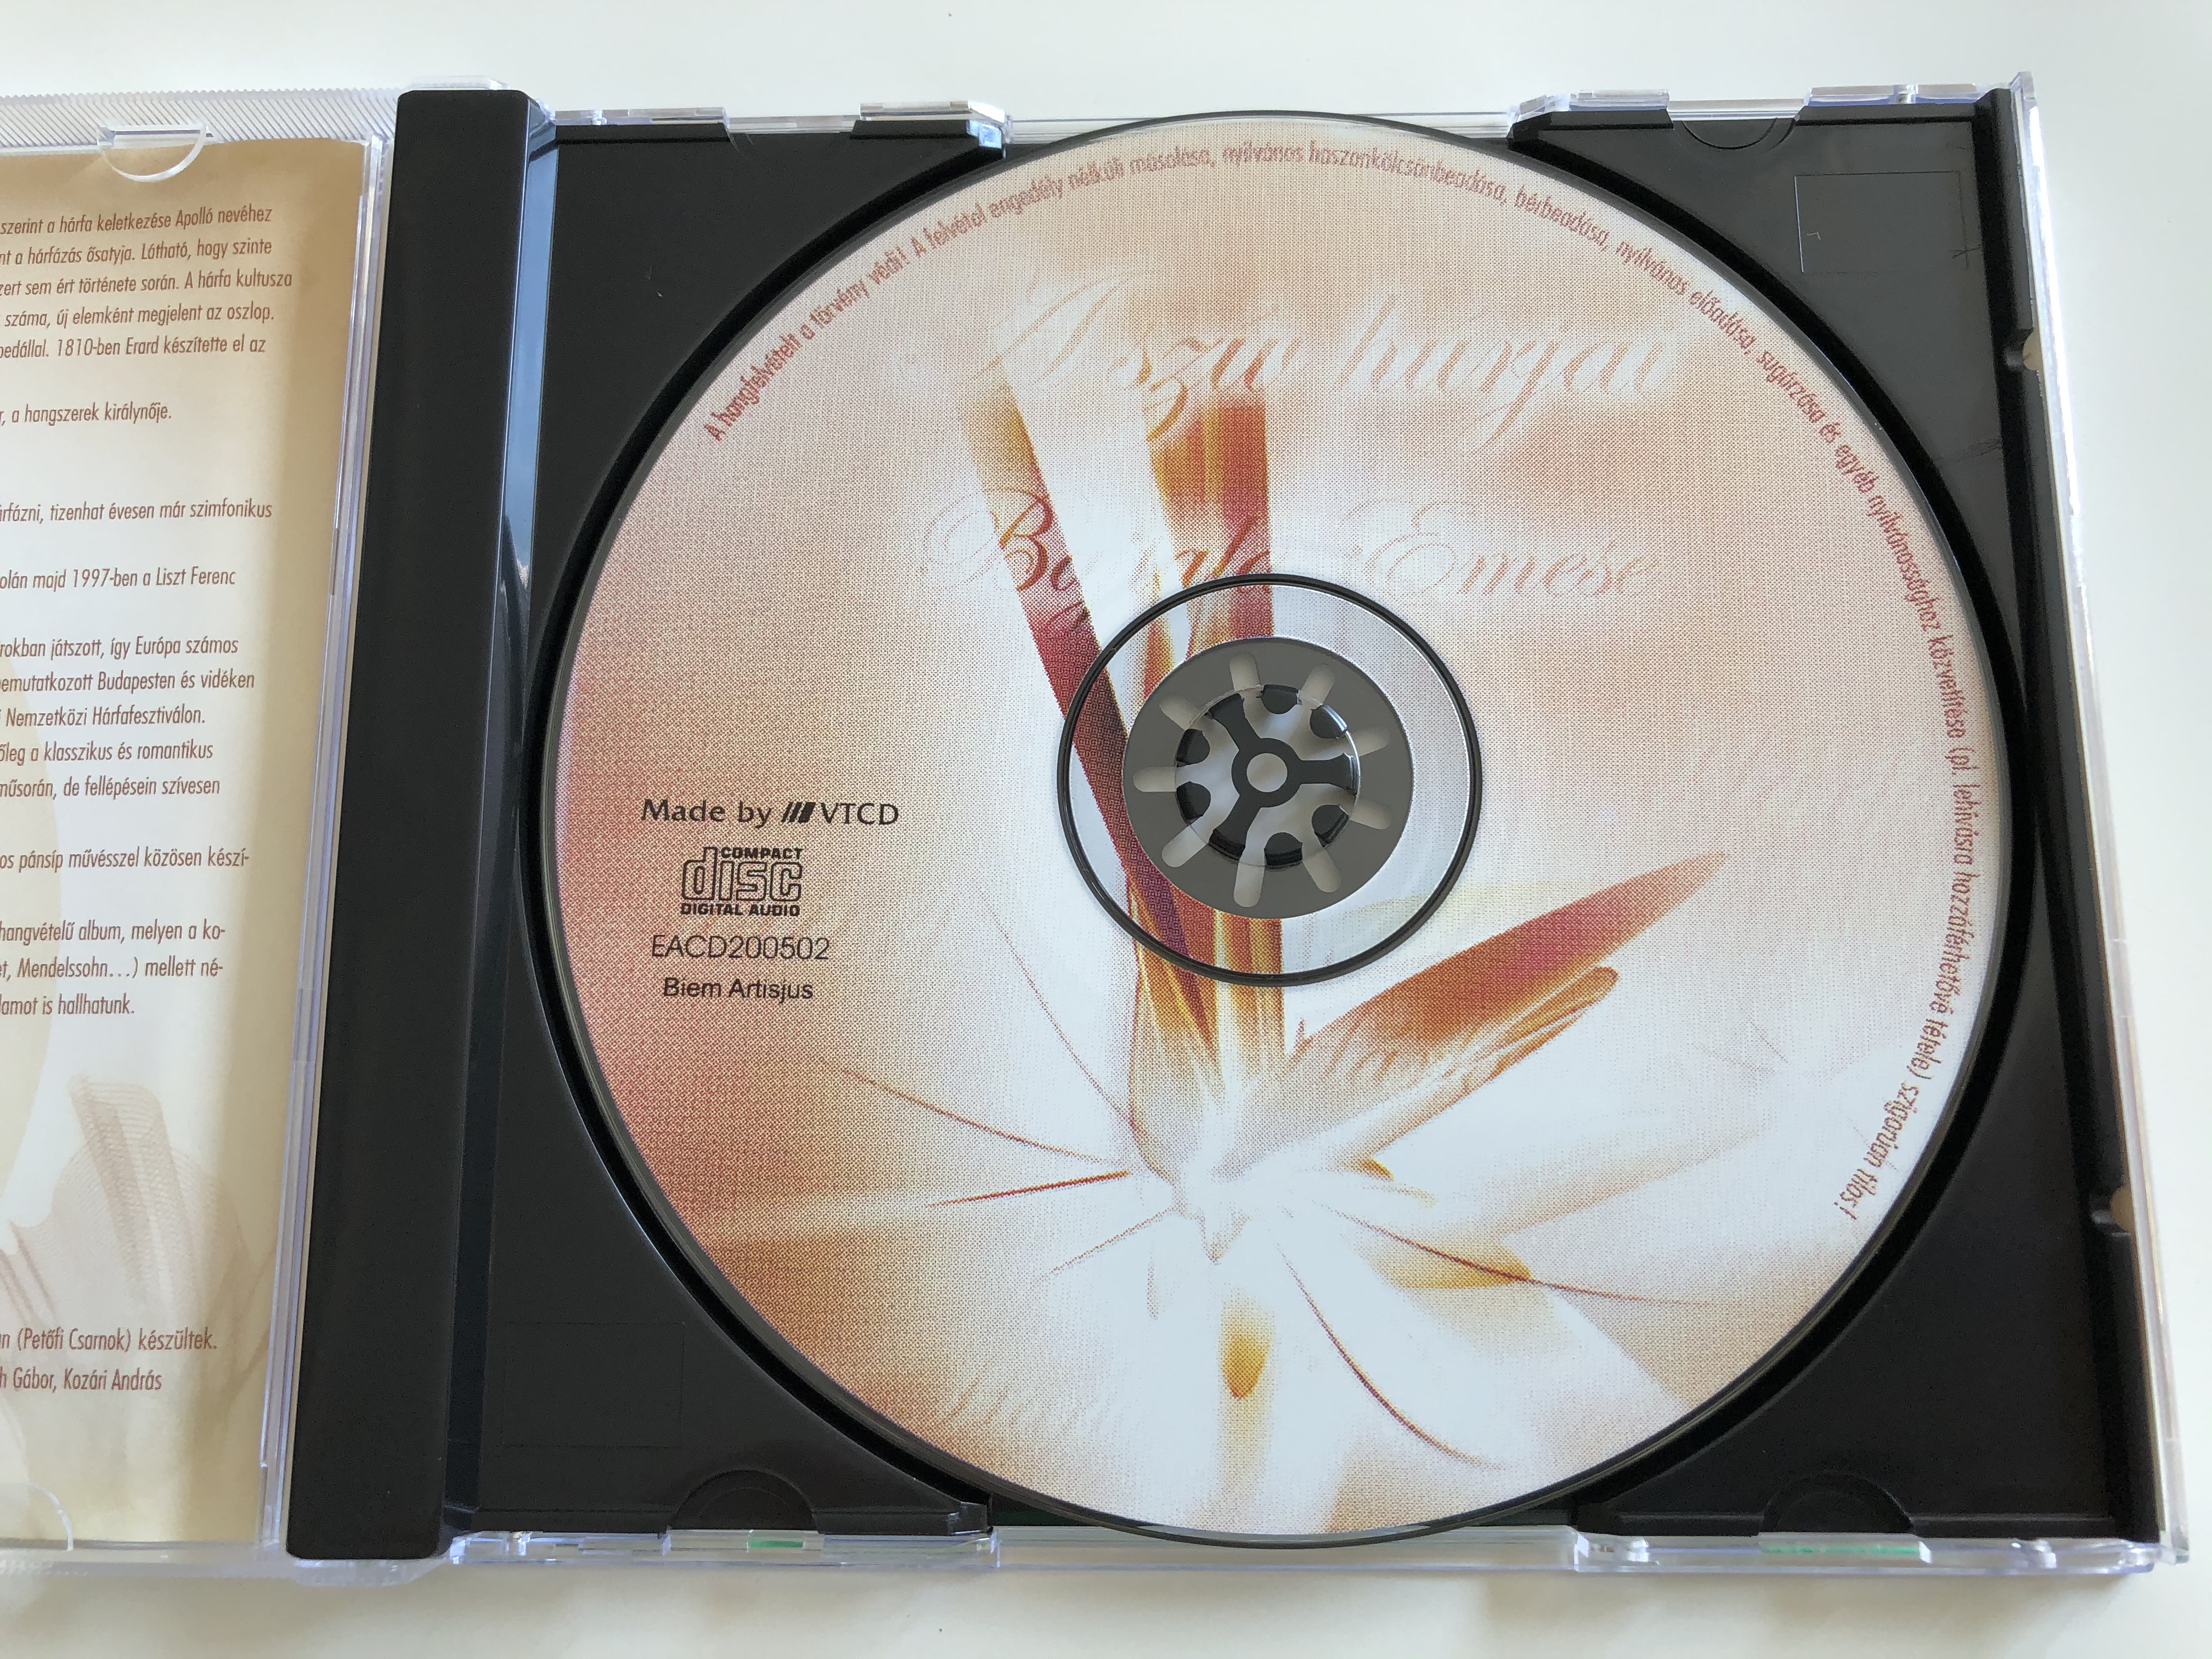 a-sziv-hurjai-bajtala-emese-harfa-kozari-andras-audio-cd-2005-eacd200502-3-.jpg